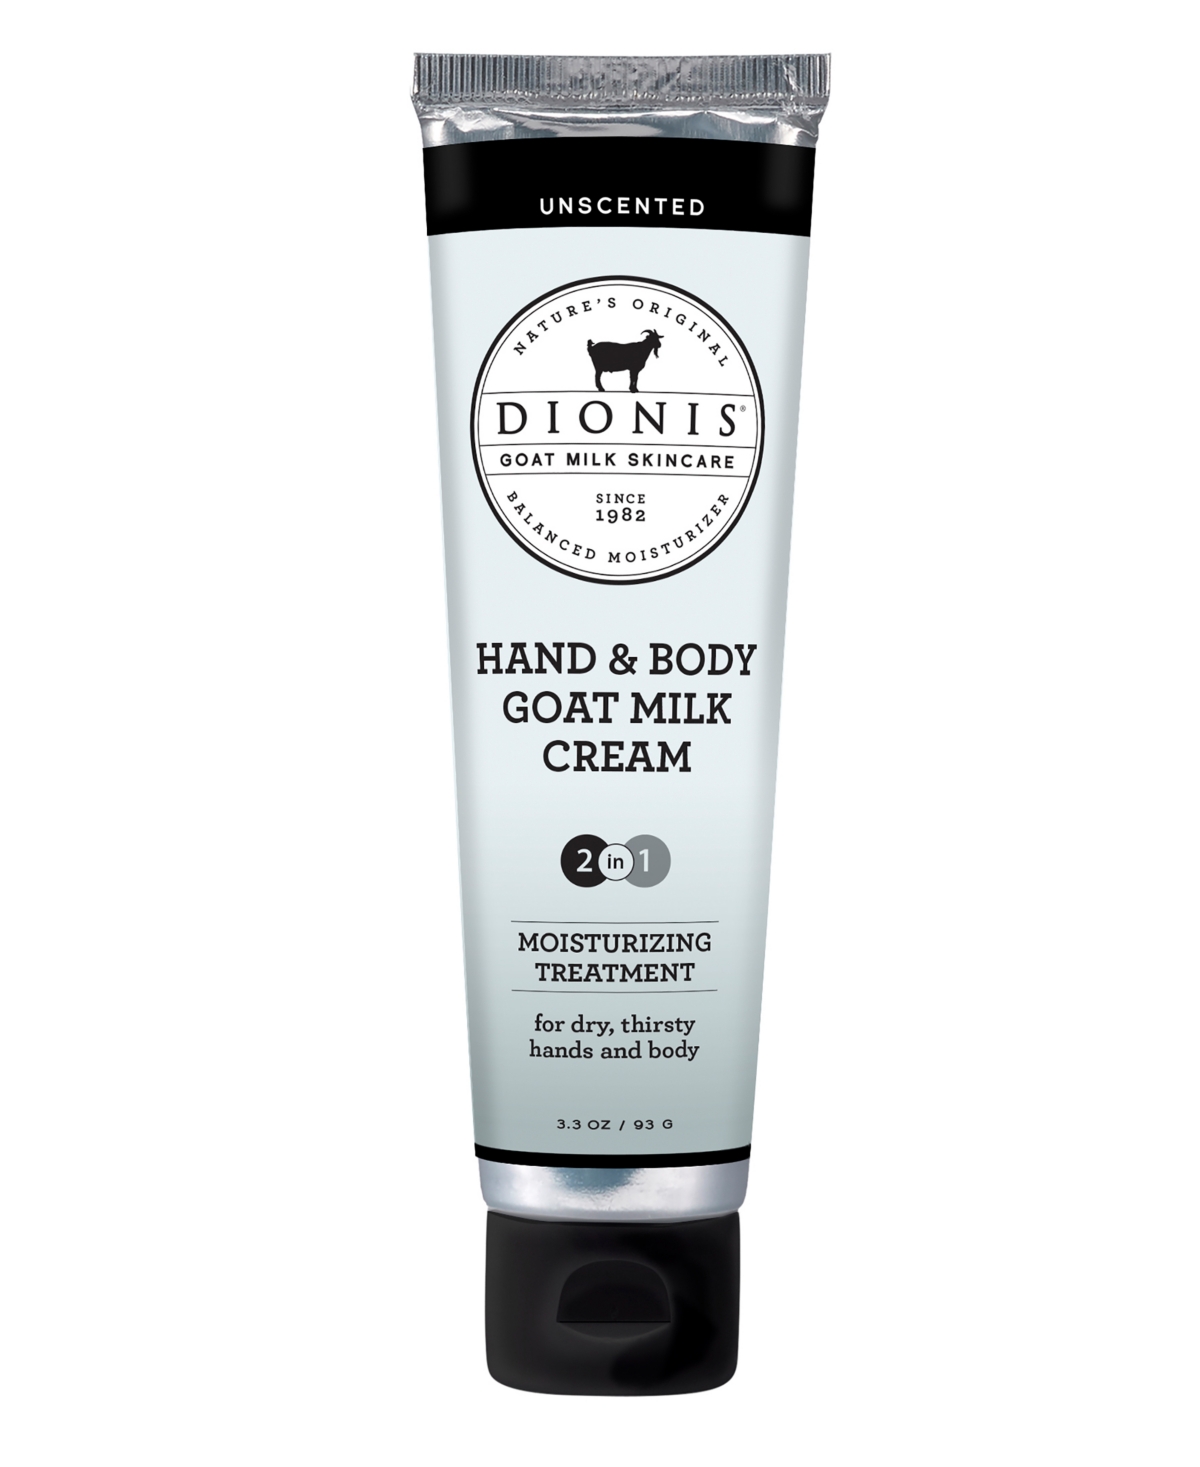 Dionis Unscented Hand & Body Goat Milk Cream